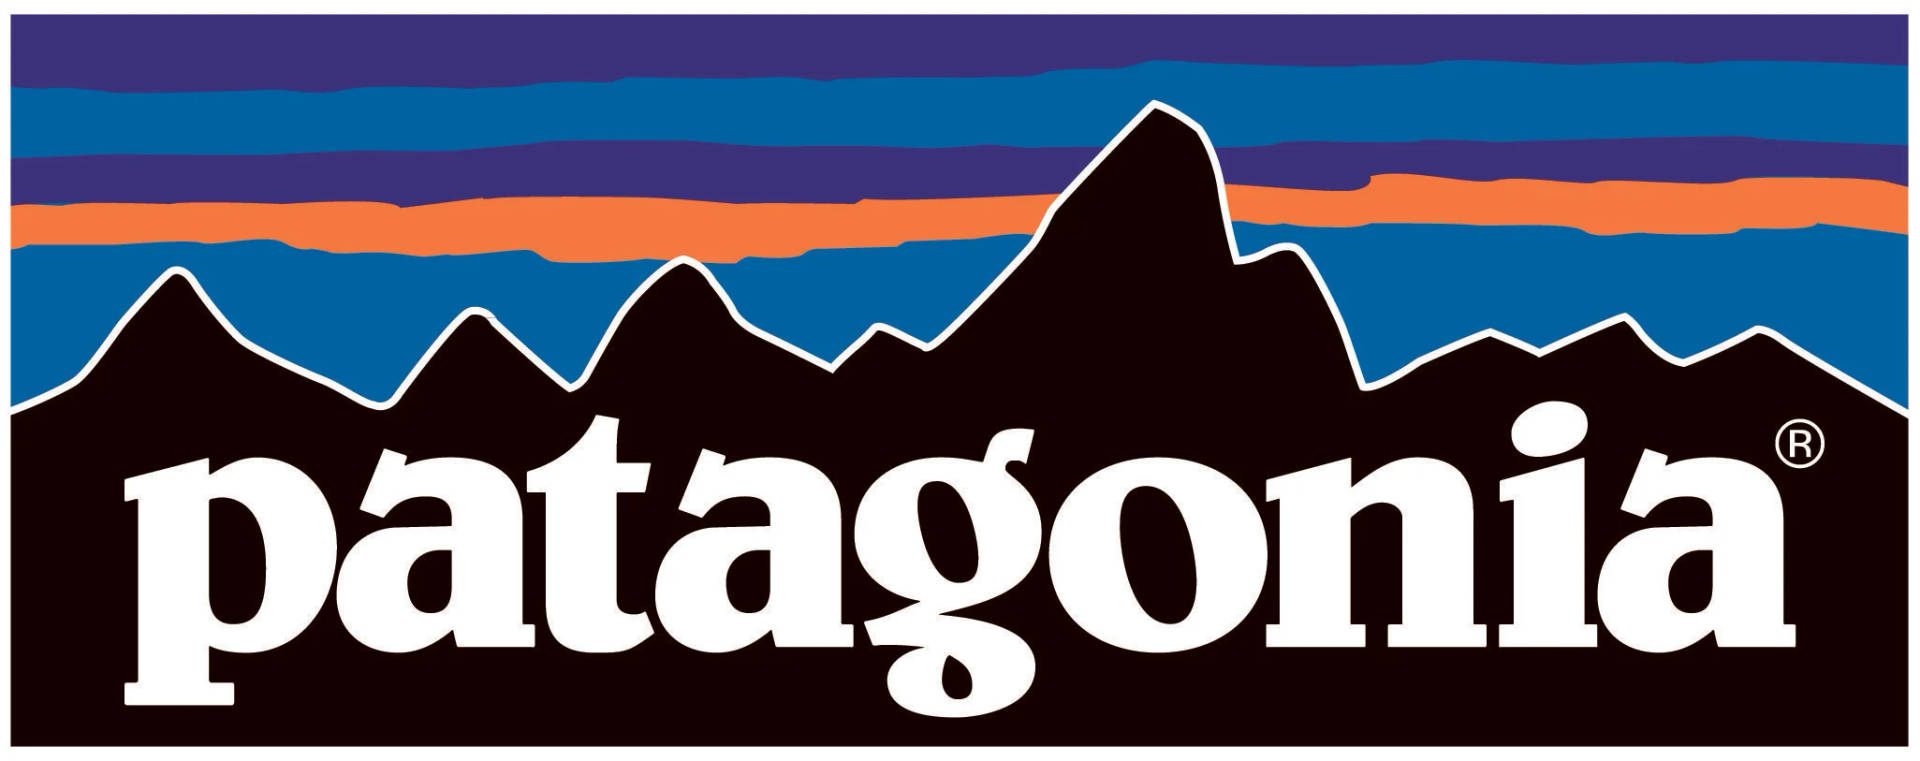 The Iconic Patagonia Brand Logo Wallpaper